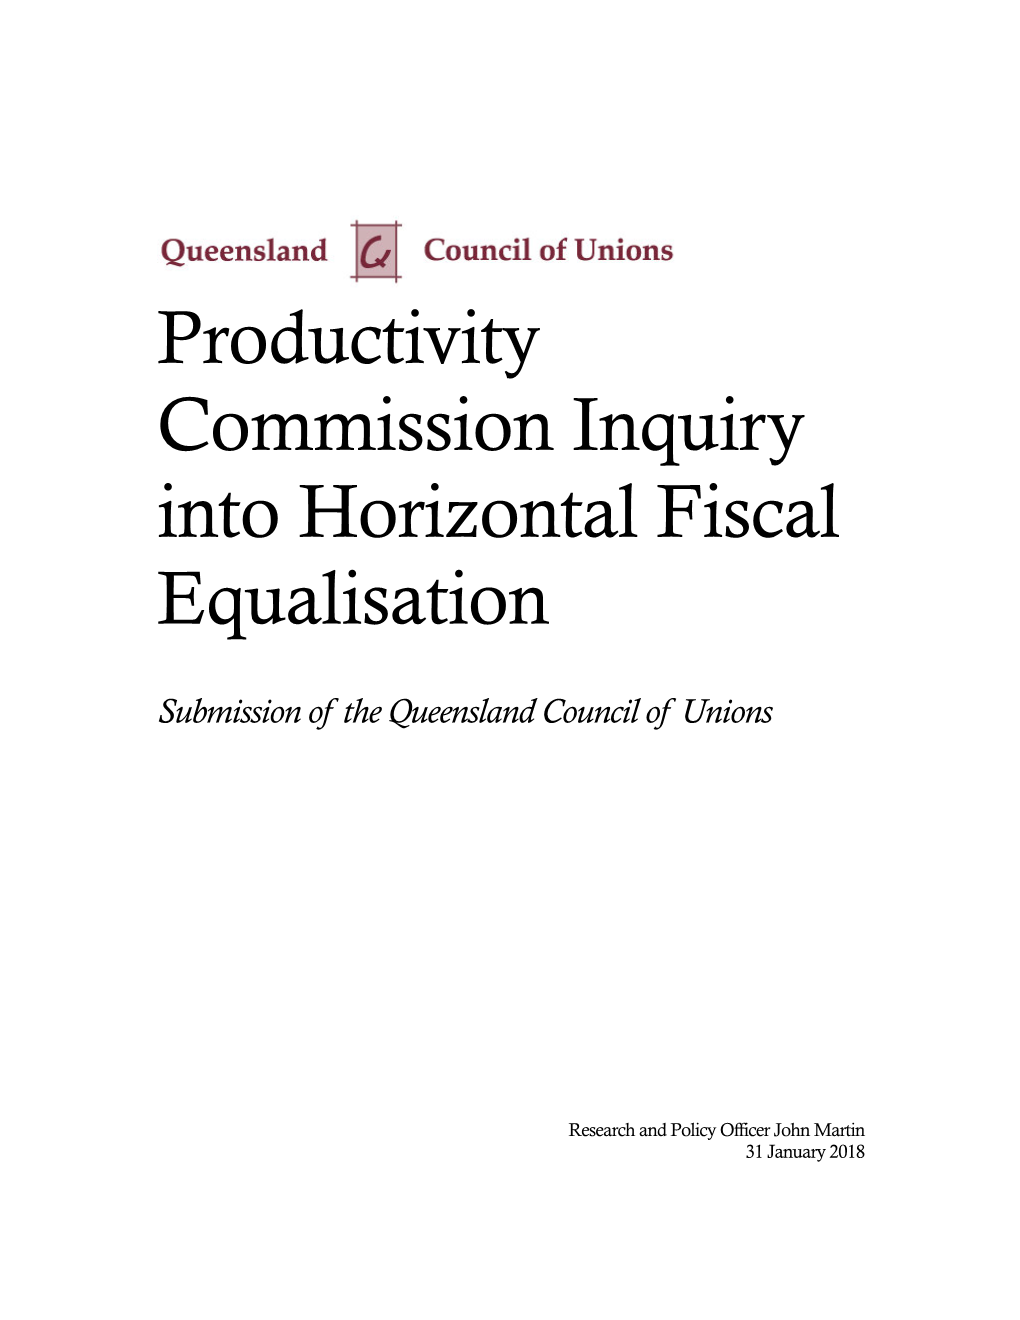 Horizontal Fiscal Equalisation